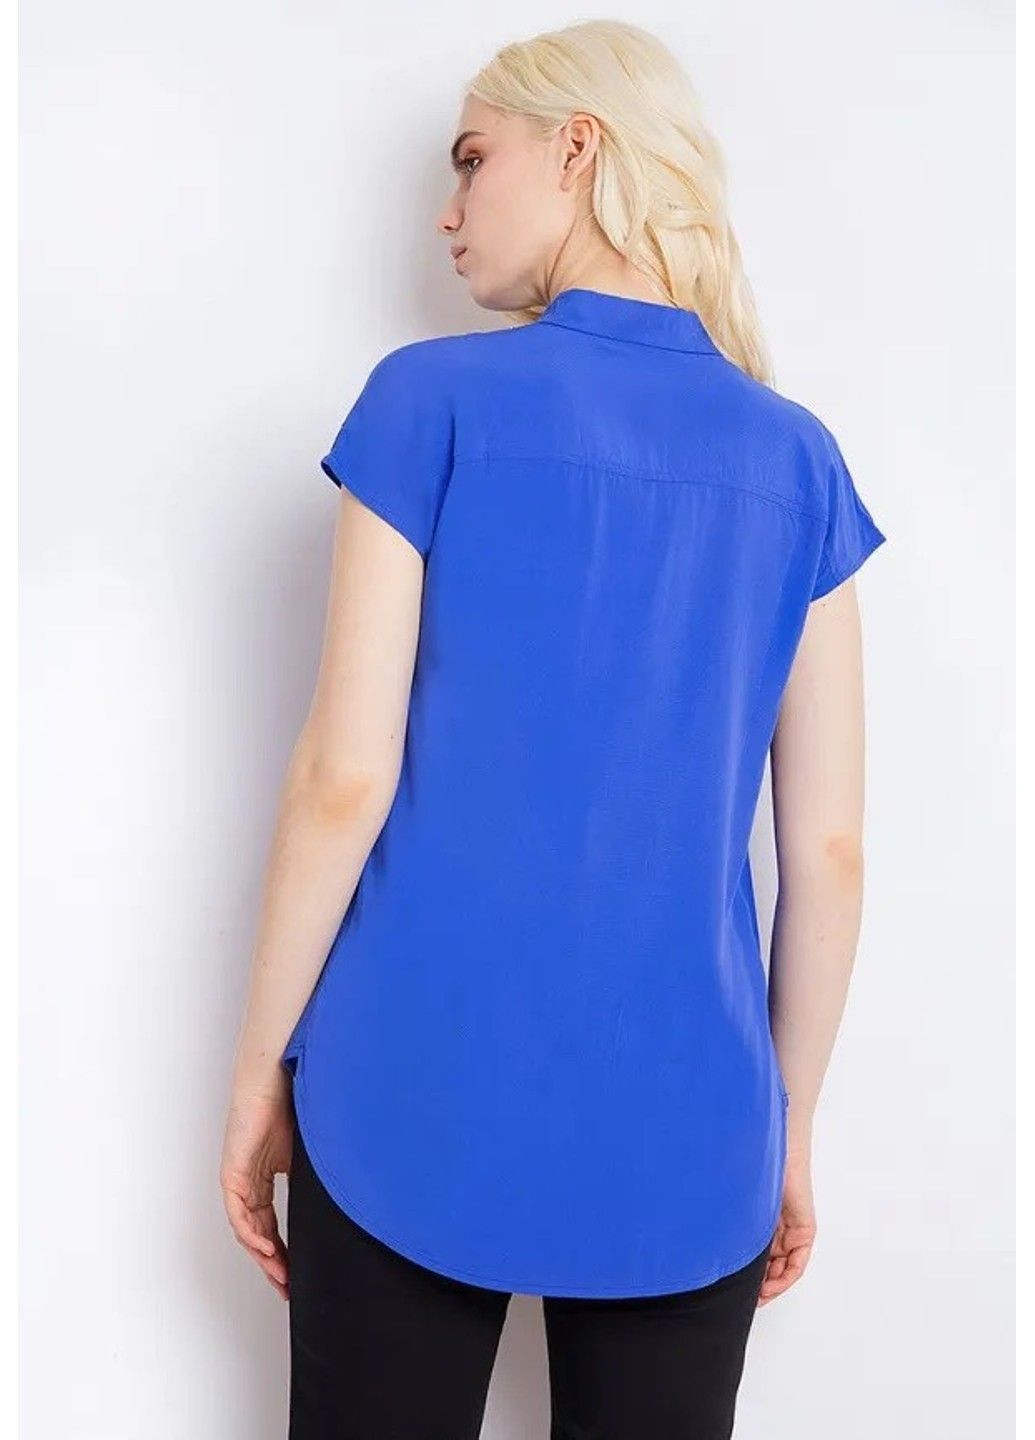 Синяя летняя блузка s18-14069-815 Finn Flare